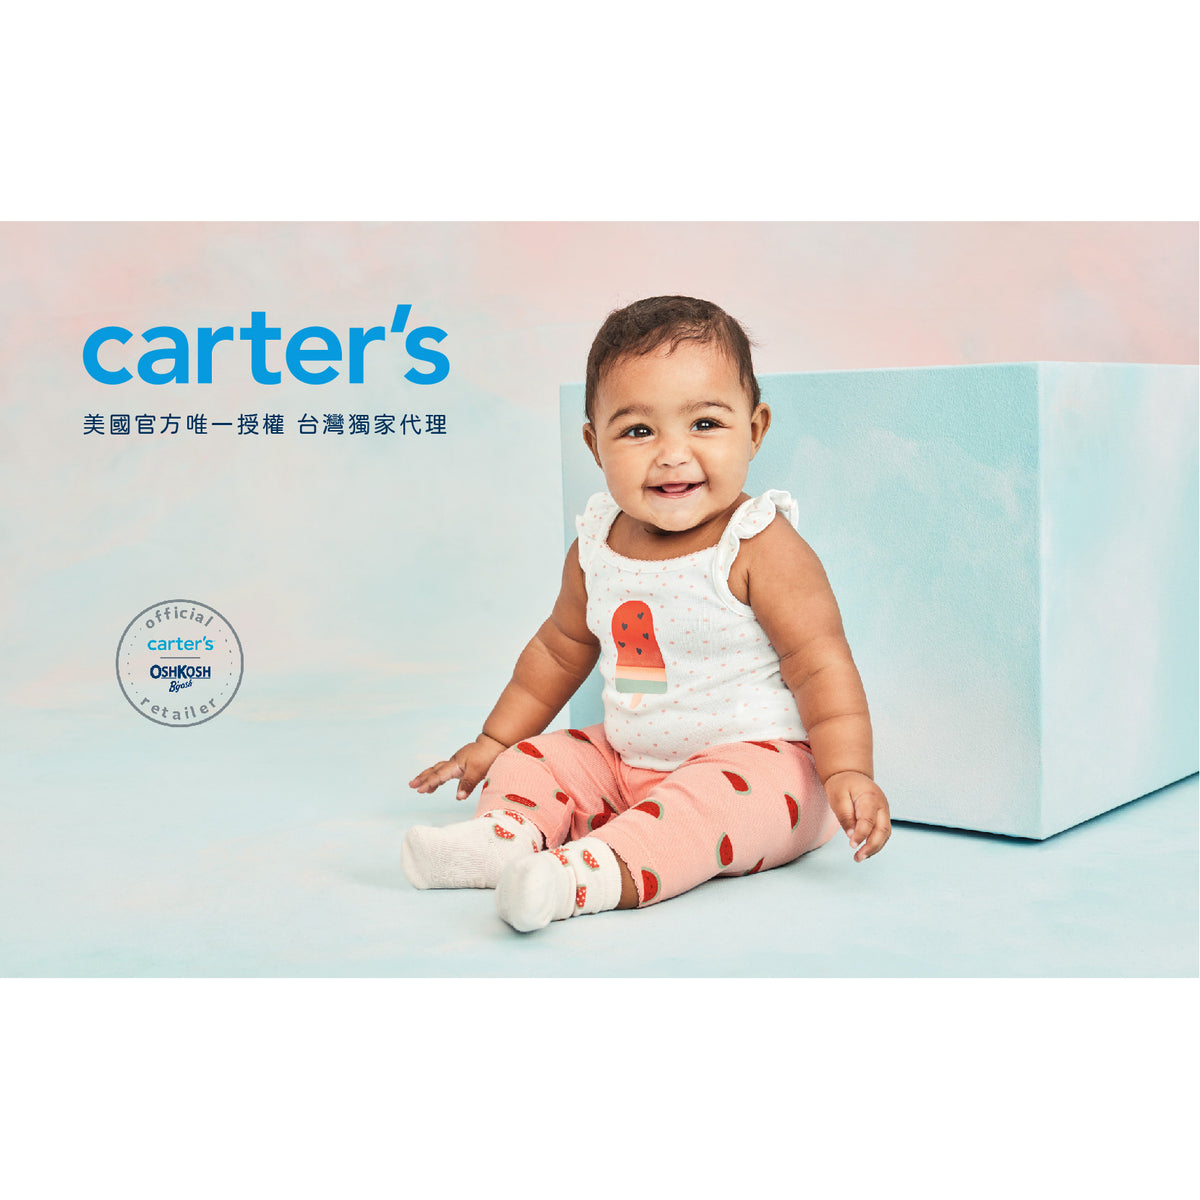 Carter's 粉紅愛心連身褲(6M-24M)